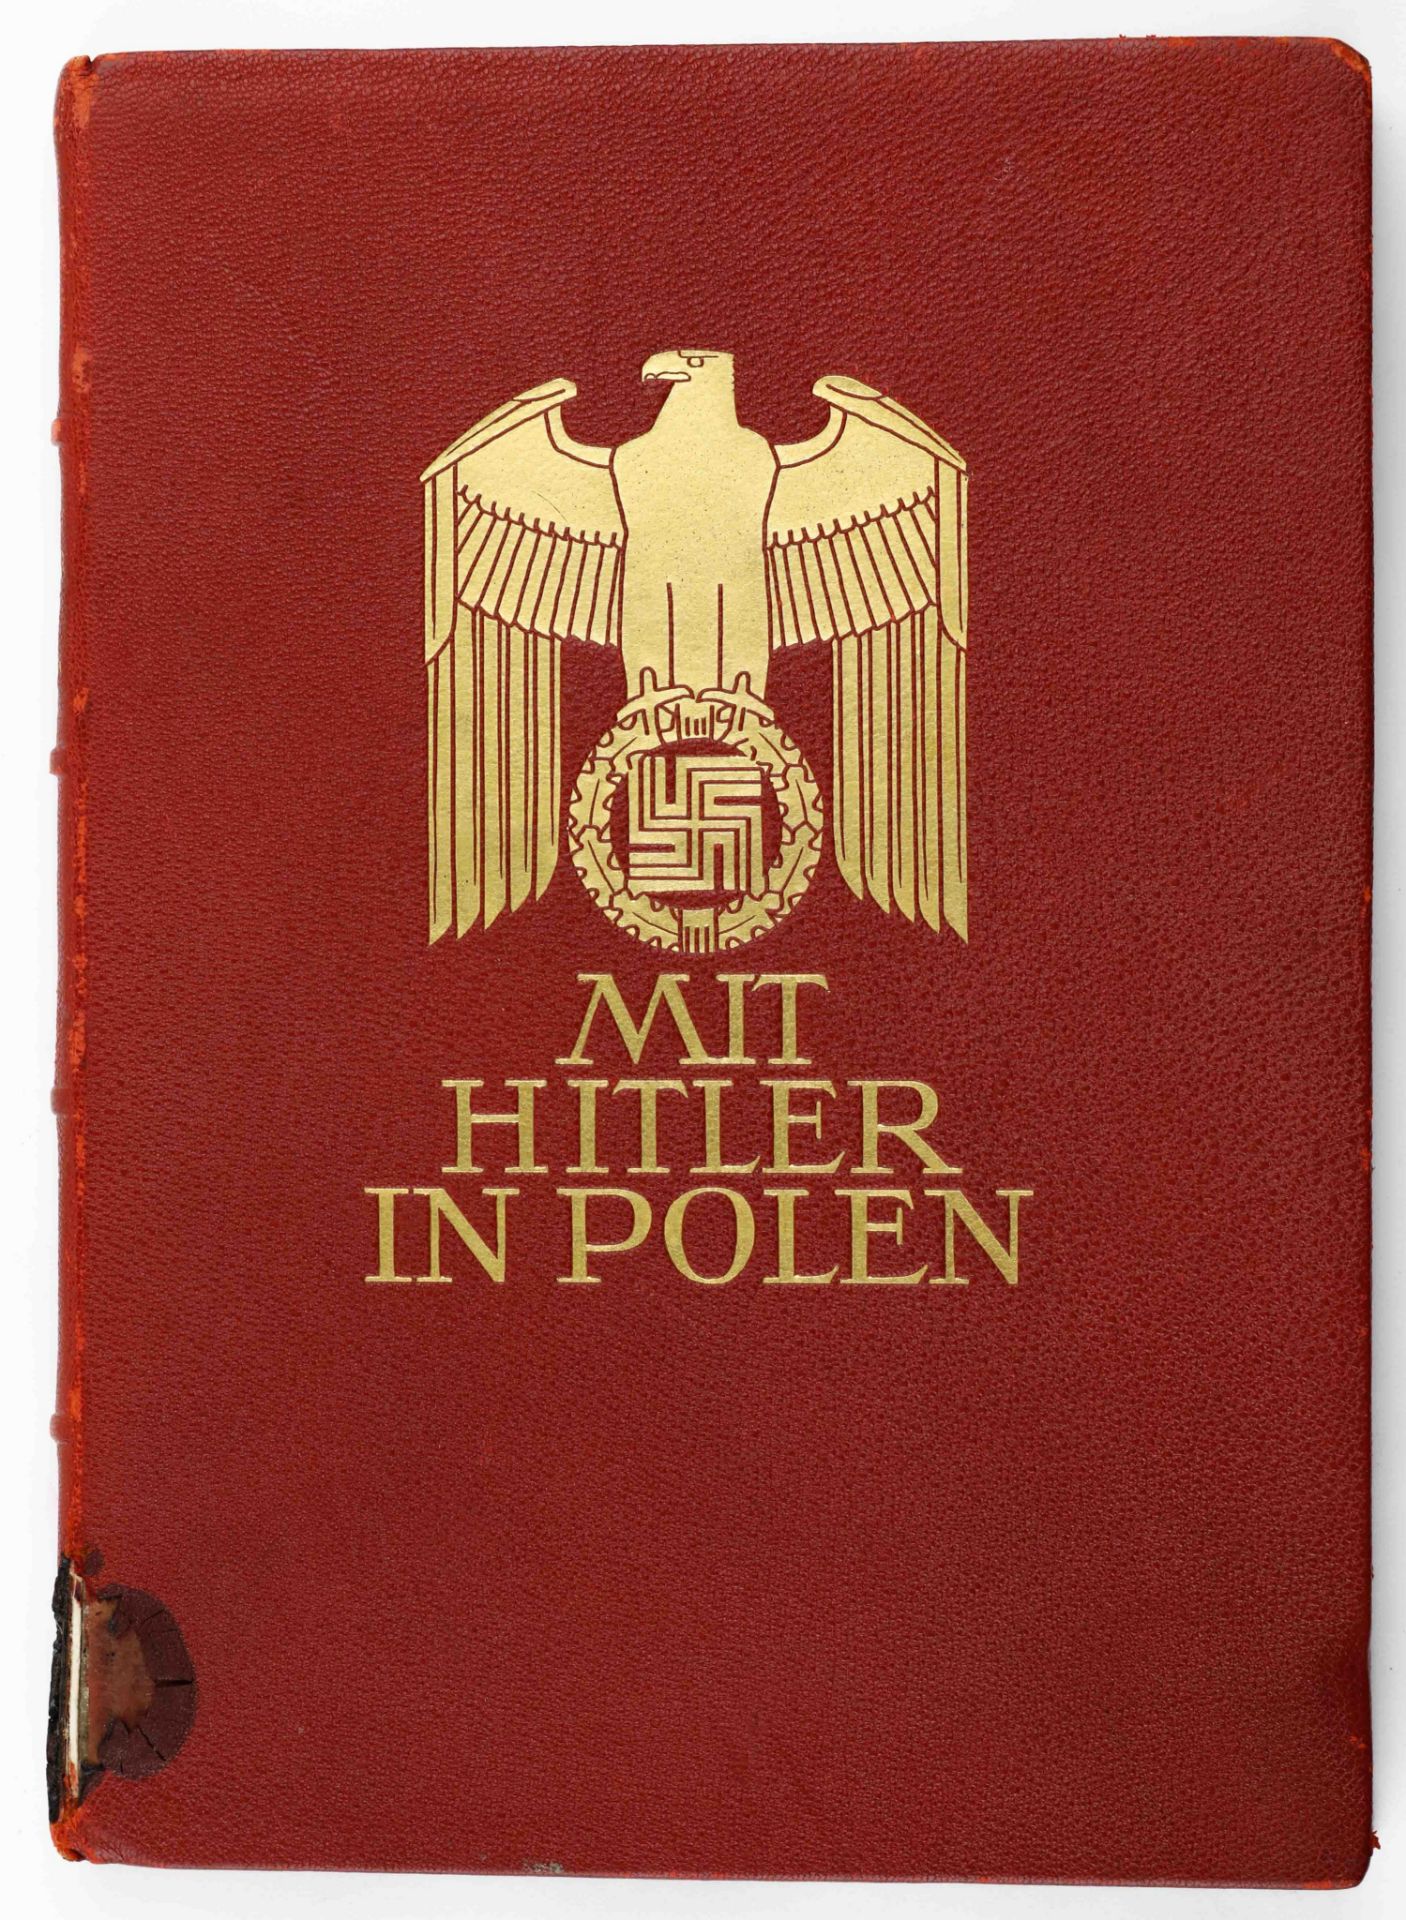 ADOLF HITLER'S COPY OF HOFFMANN'S 'MIT HIMMLER IN POLEN'